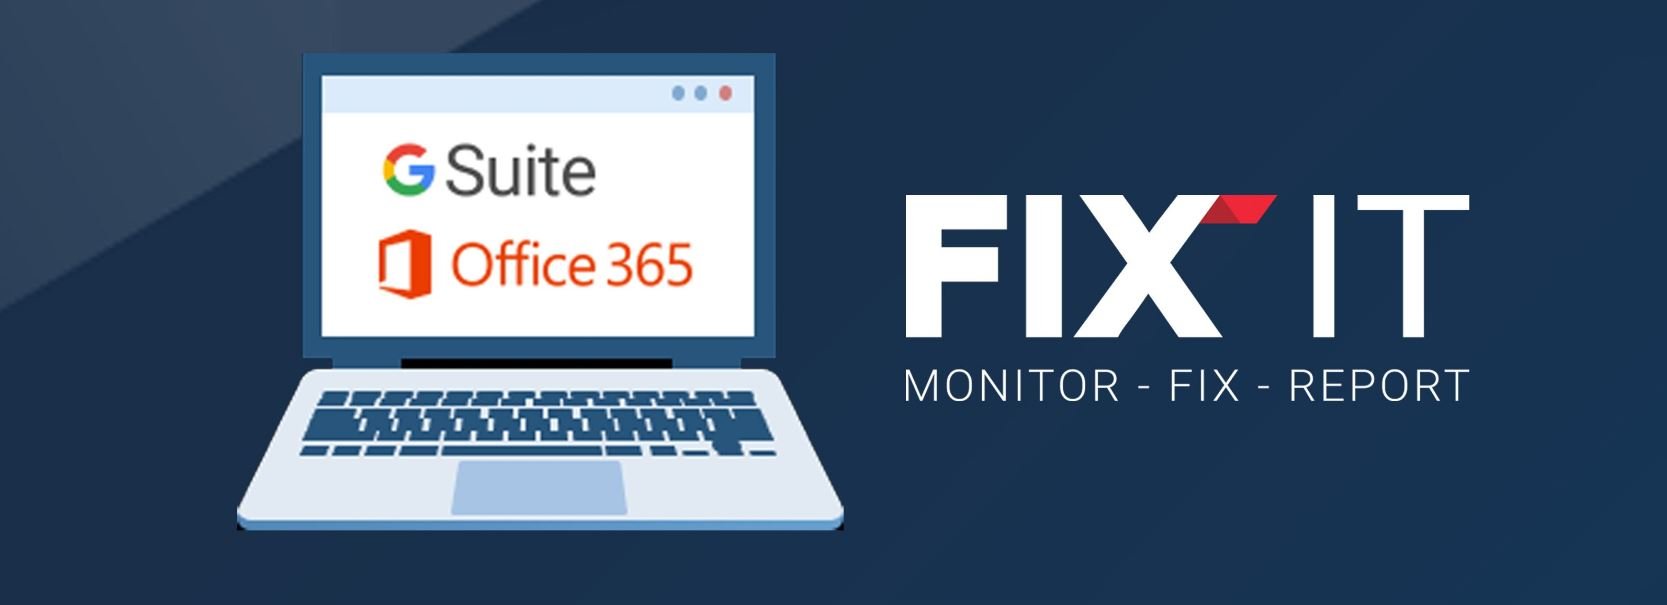 FixIT M365/Gmail Backup